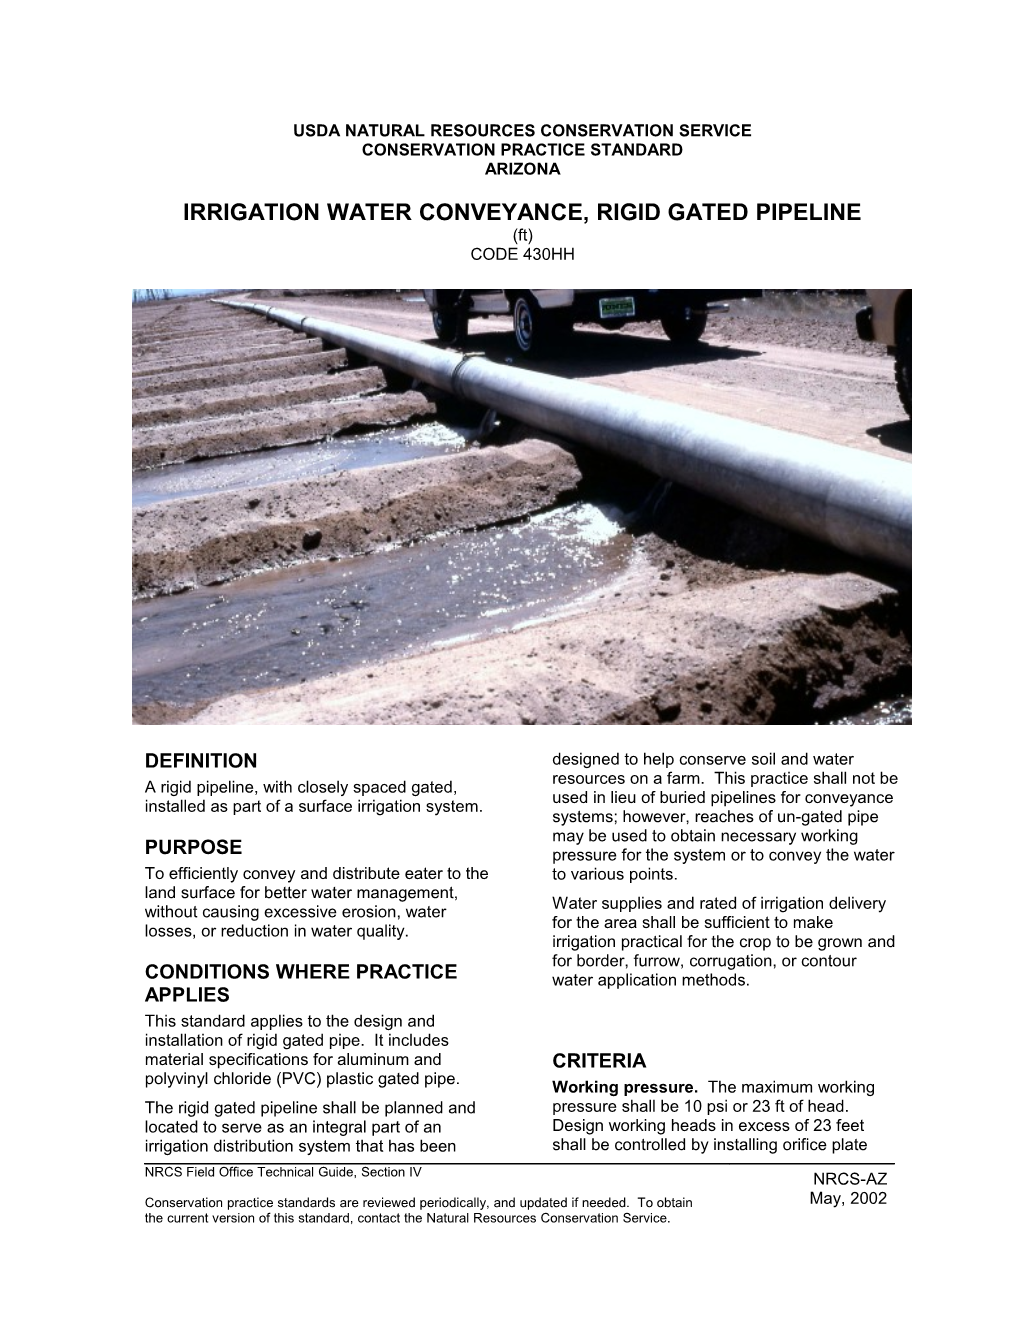 Irrigation Water Conveyance 430-HH